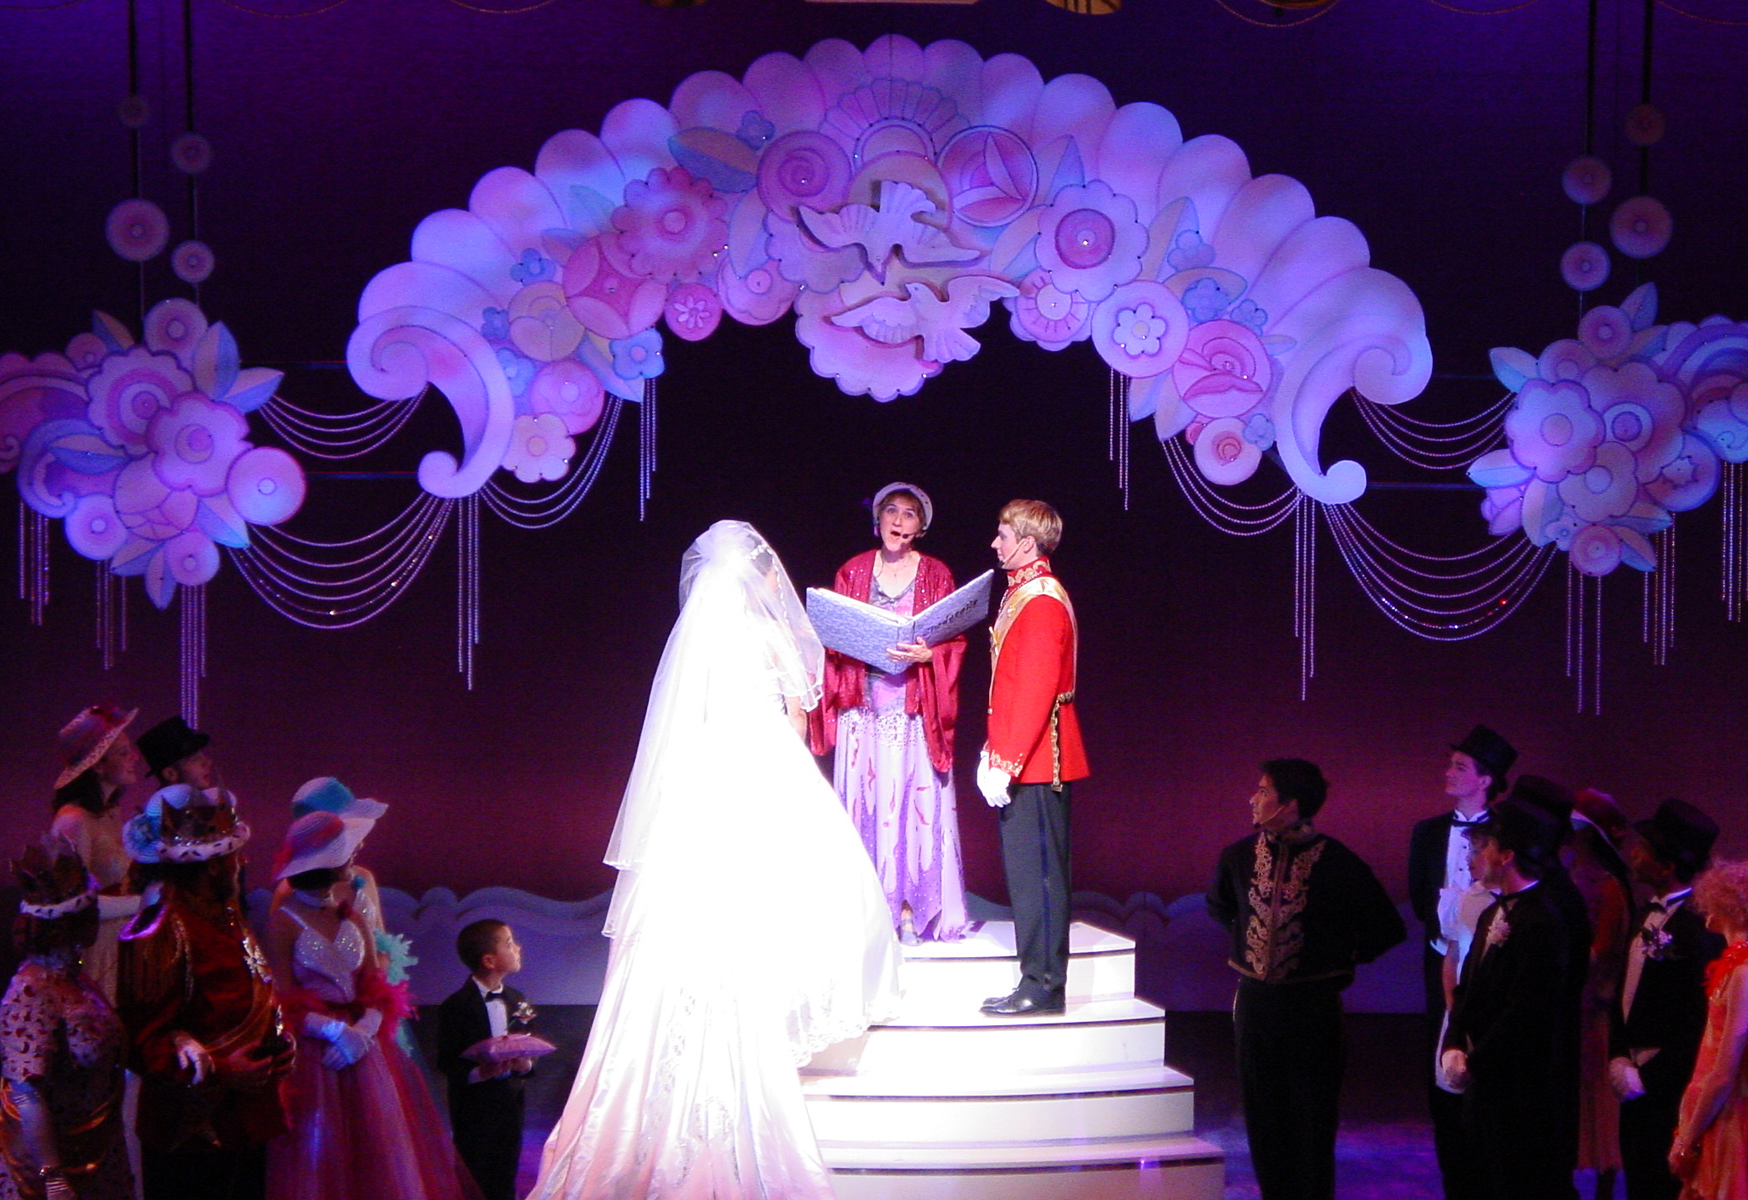 Wedding portal for 'Cinderella'